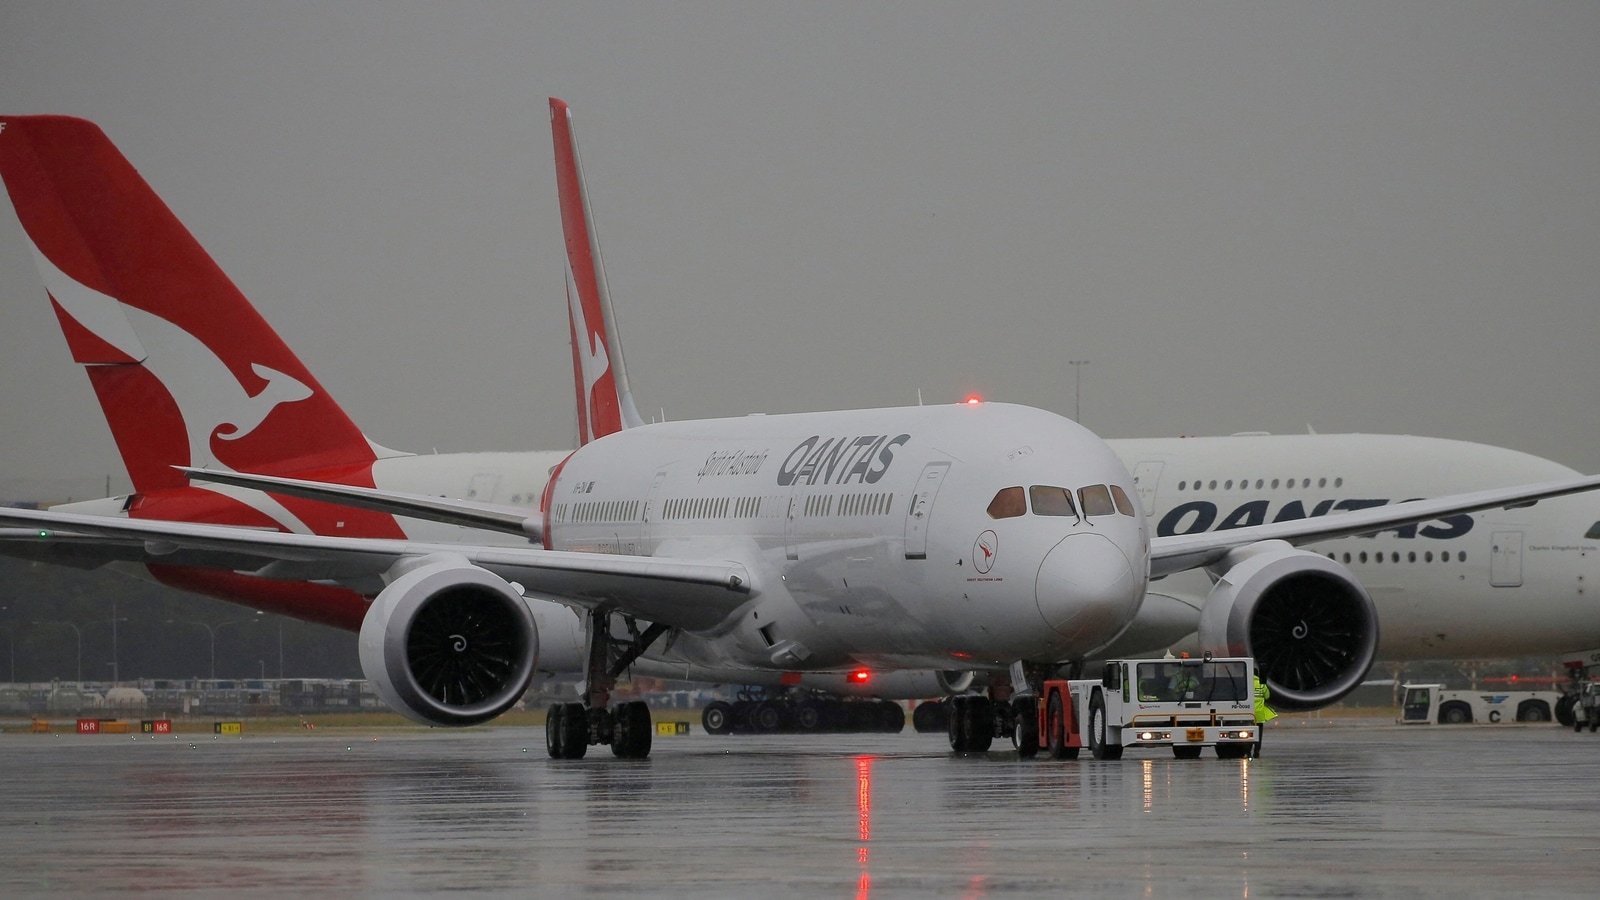 Pesawat Qantas mendarat dengan selamat di Bandara Sydney setelah melakukan panggilan darurat |  berita Dunia